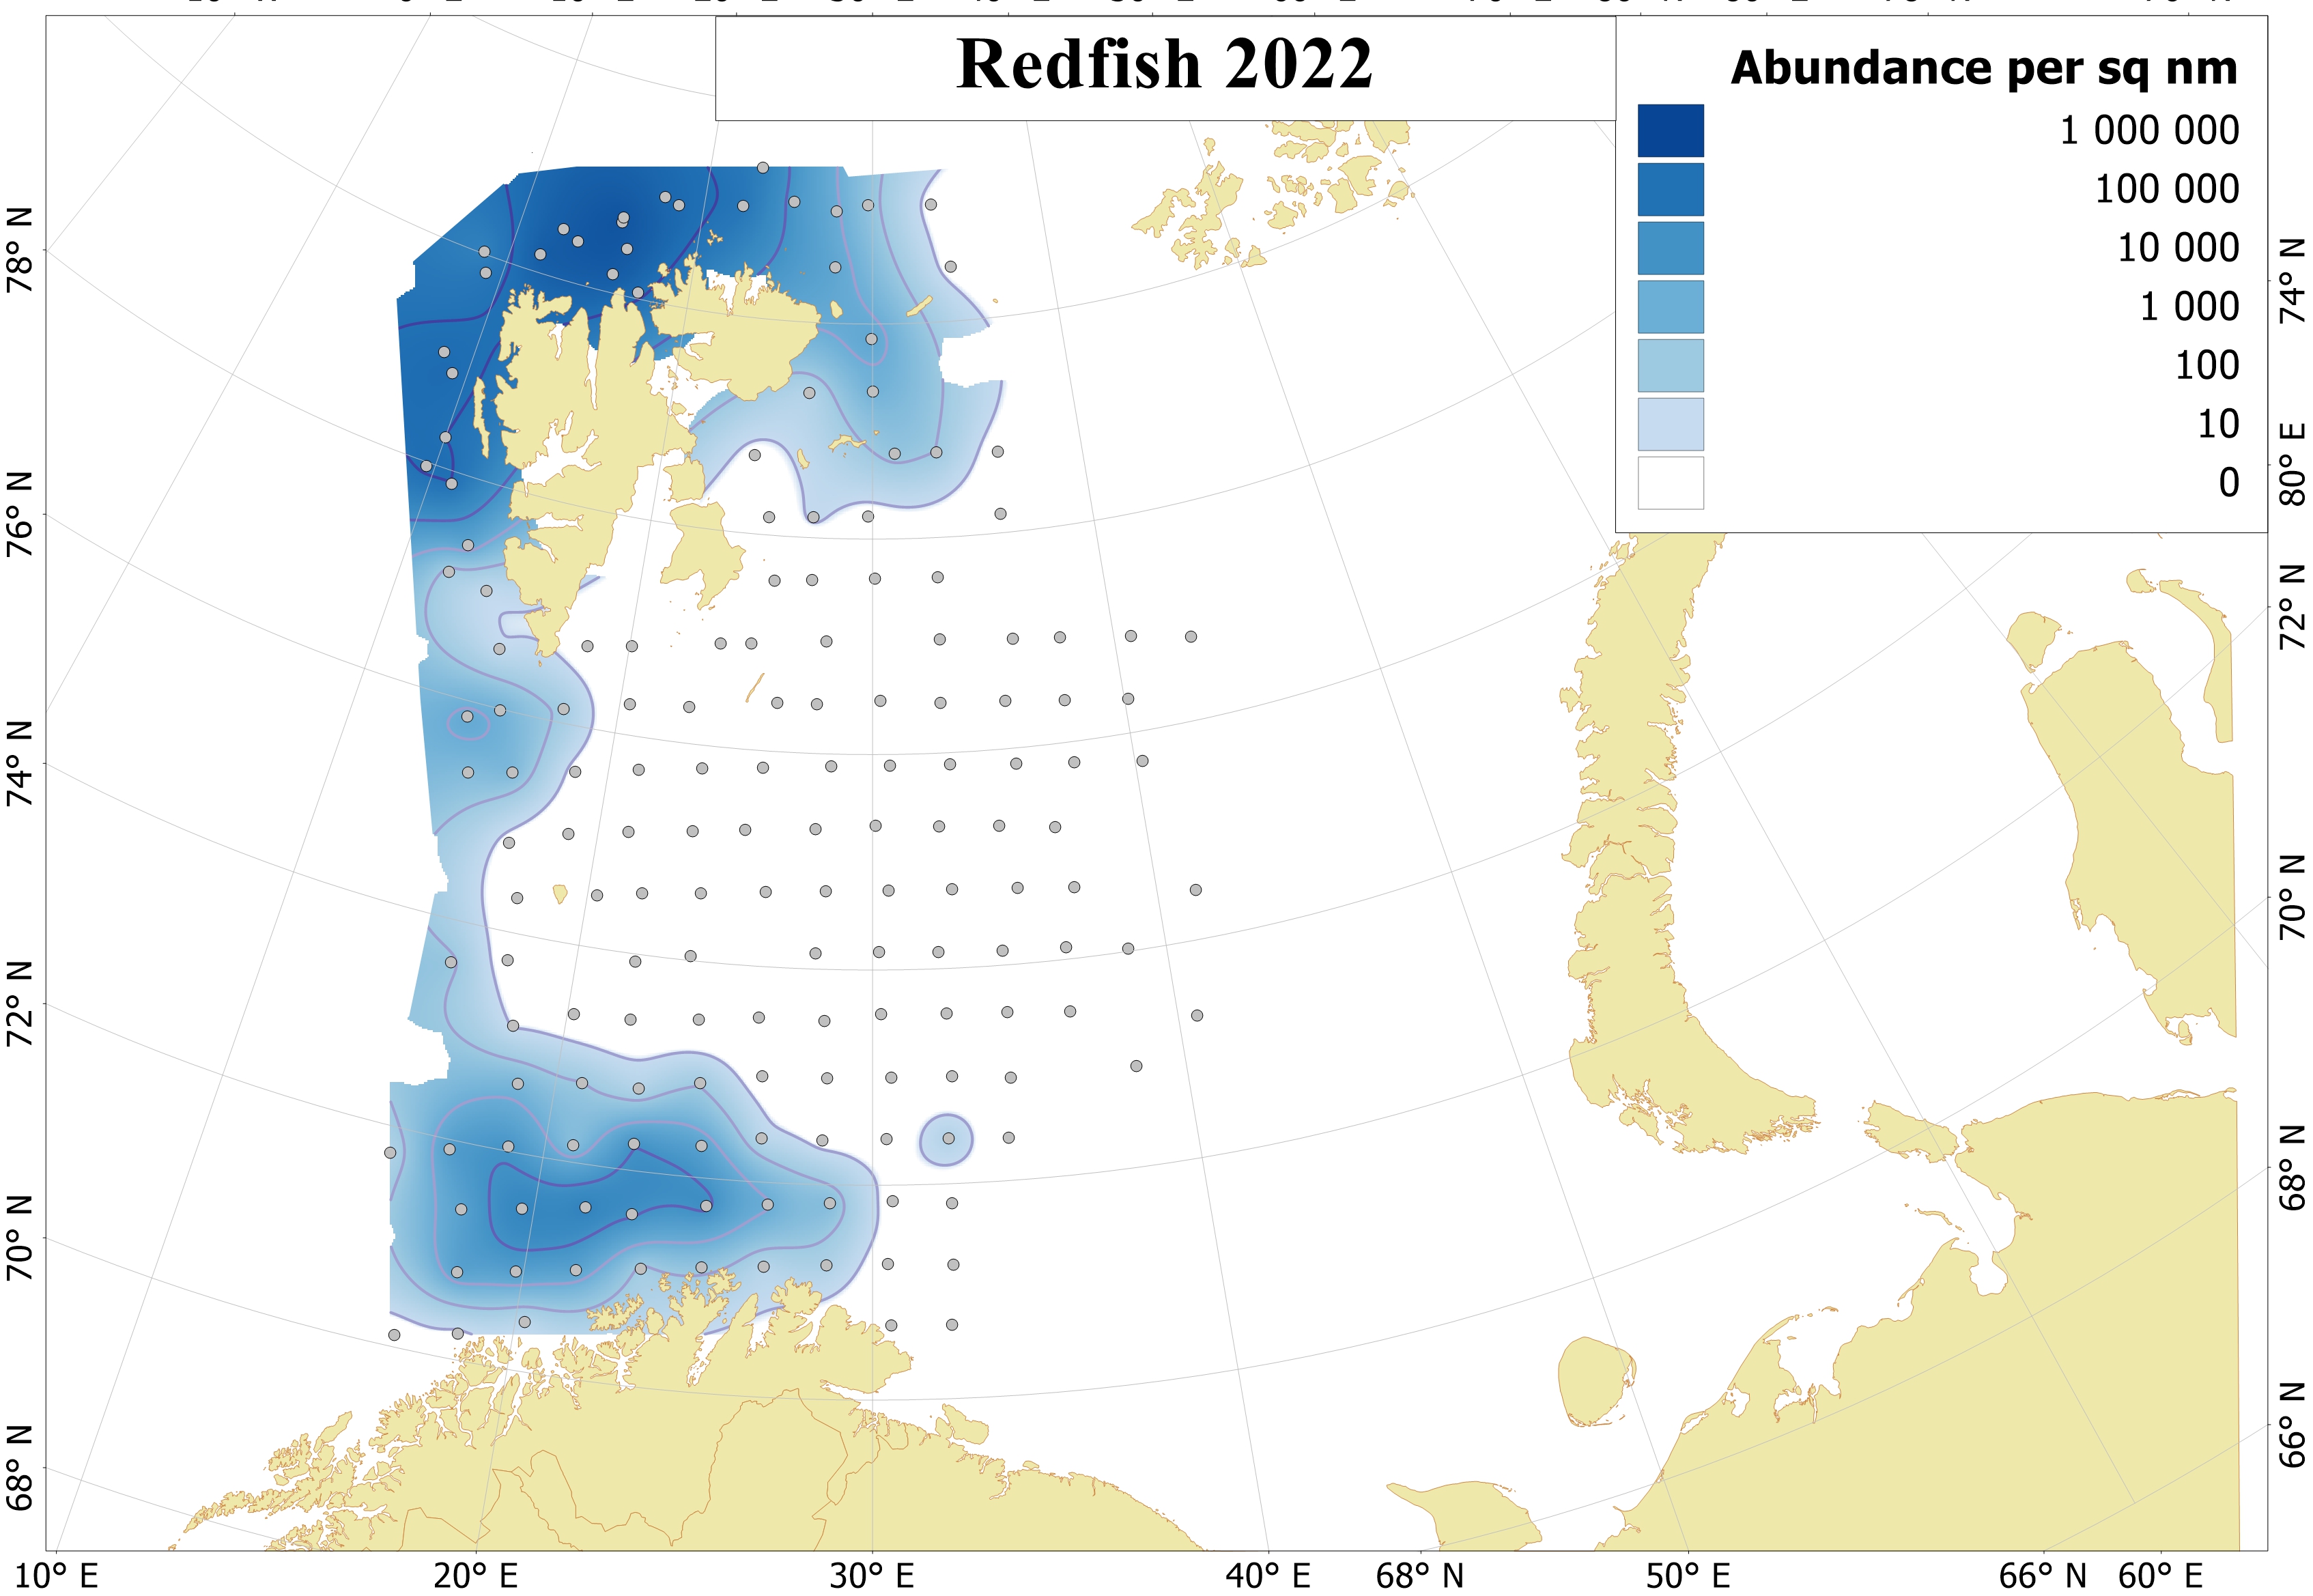 Ch 6 Distribution of redfish 2022